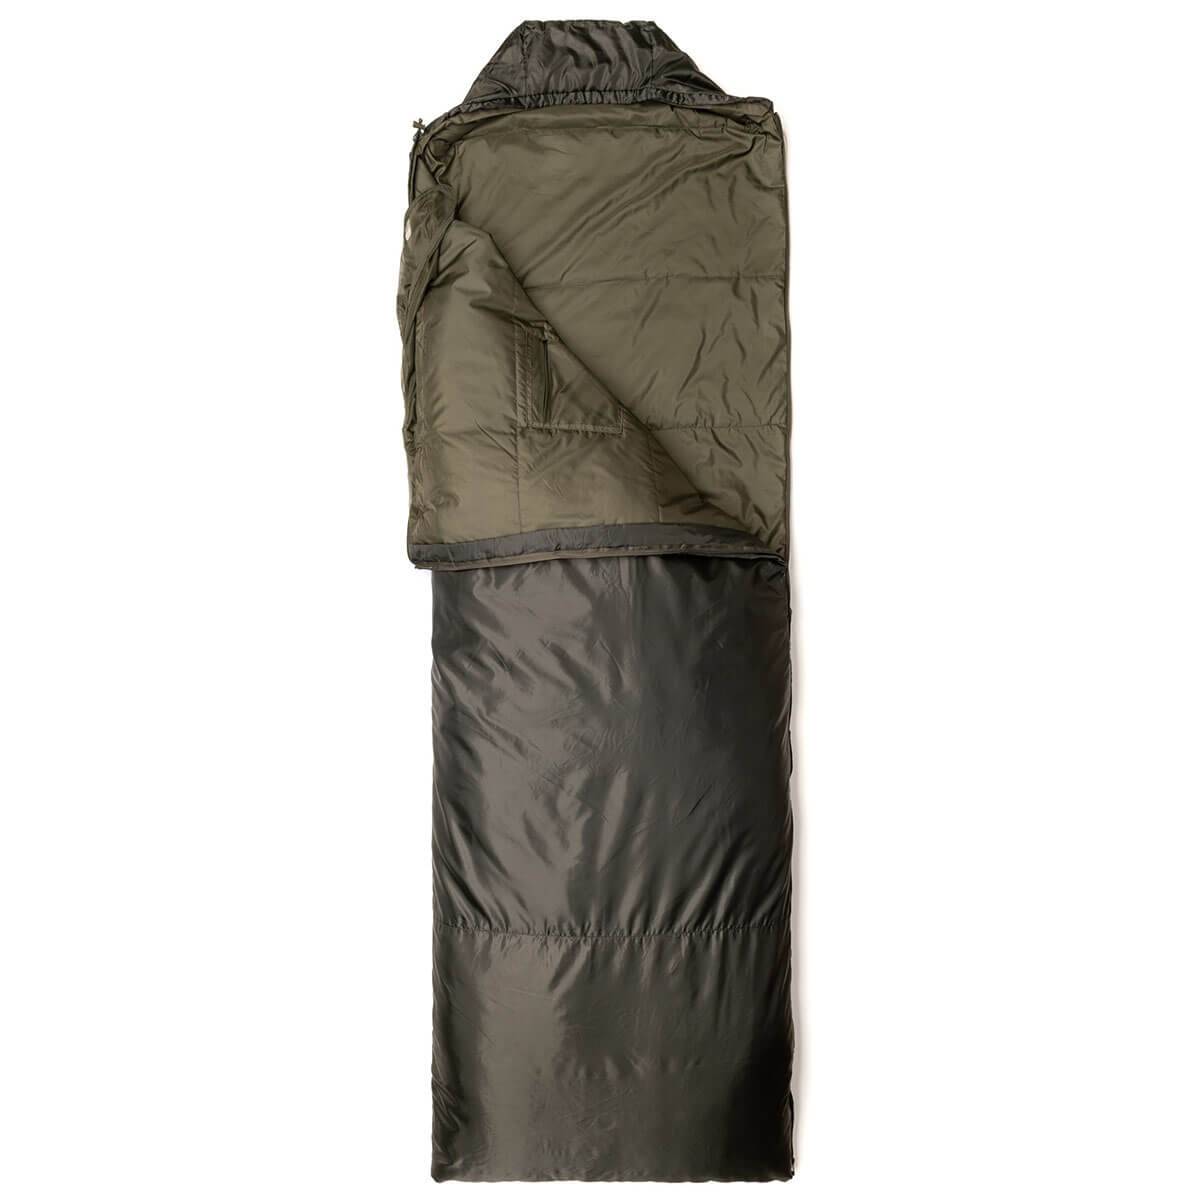 Snugpak Jungle Sleeping Bag with Mosquito Net - John Bull Clothing